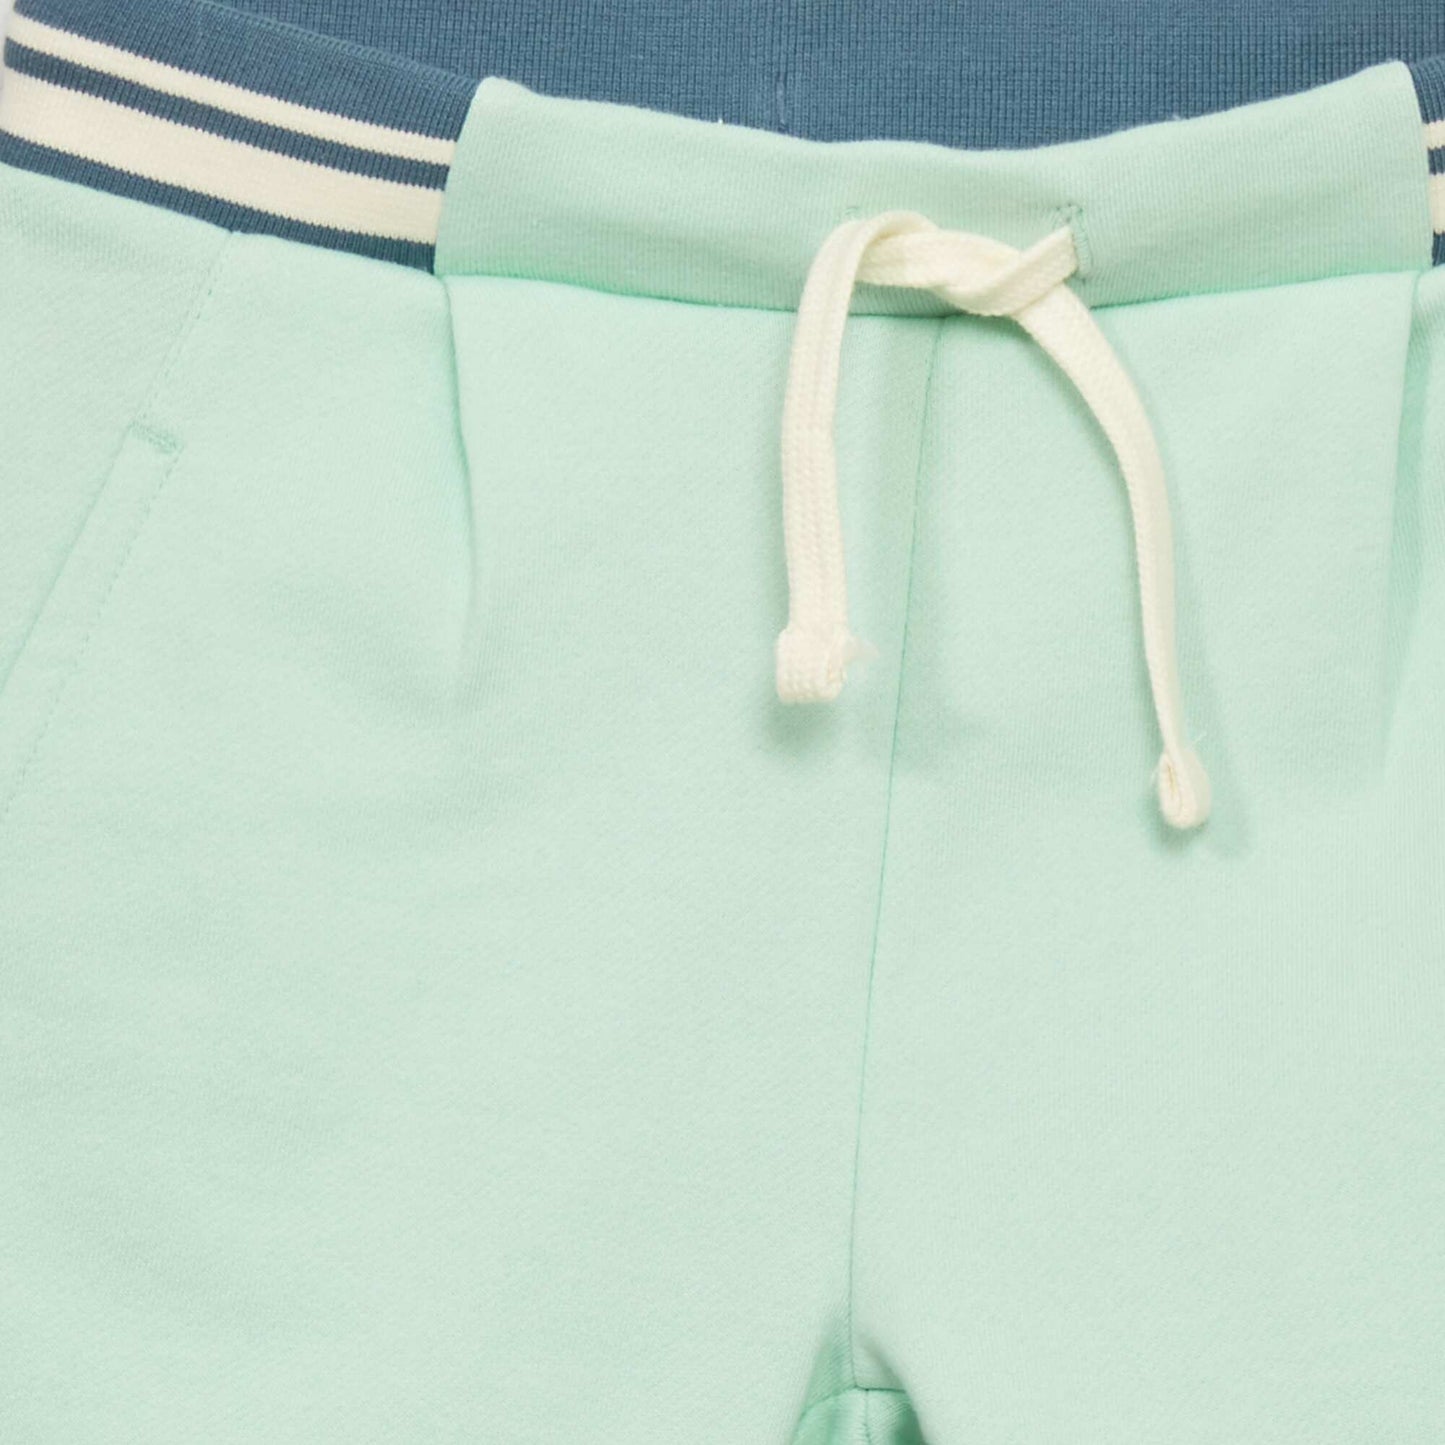 Sweatshirt fabric shorts green